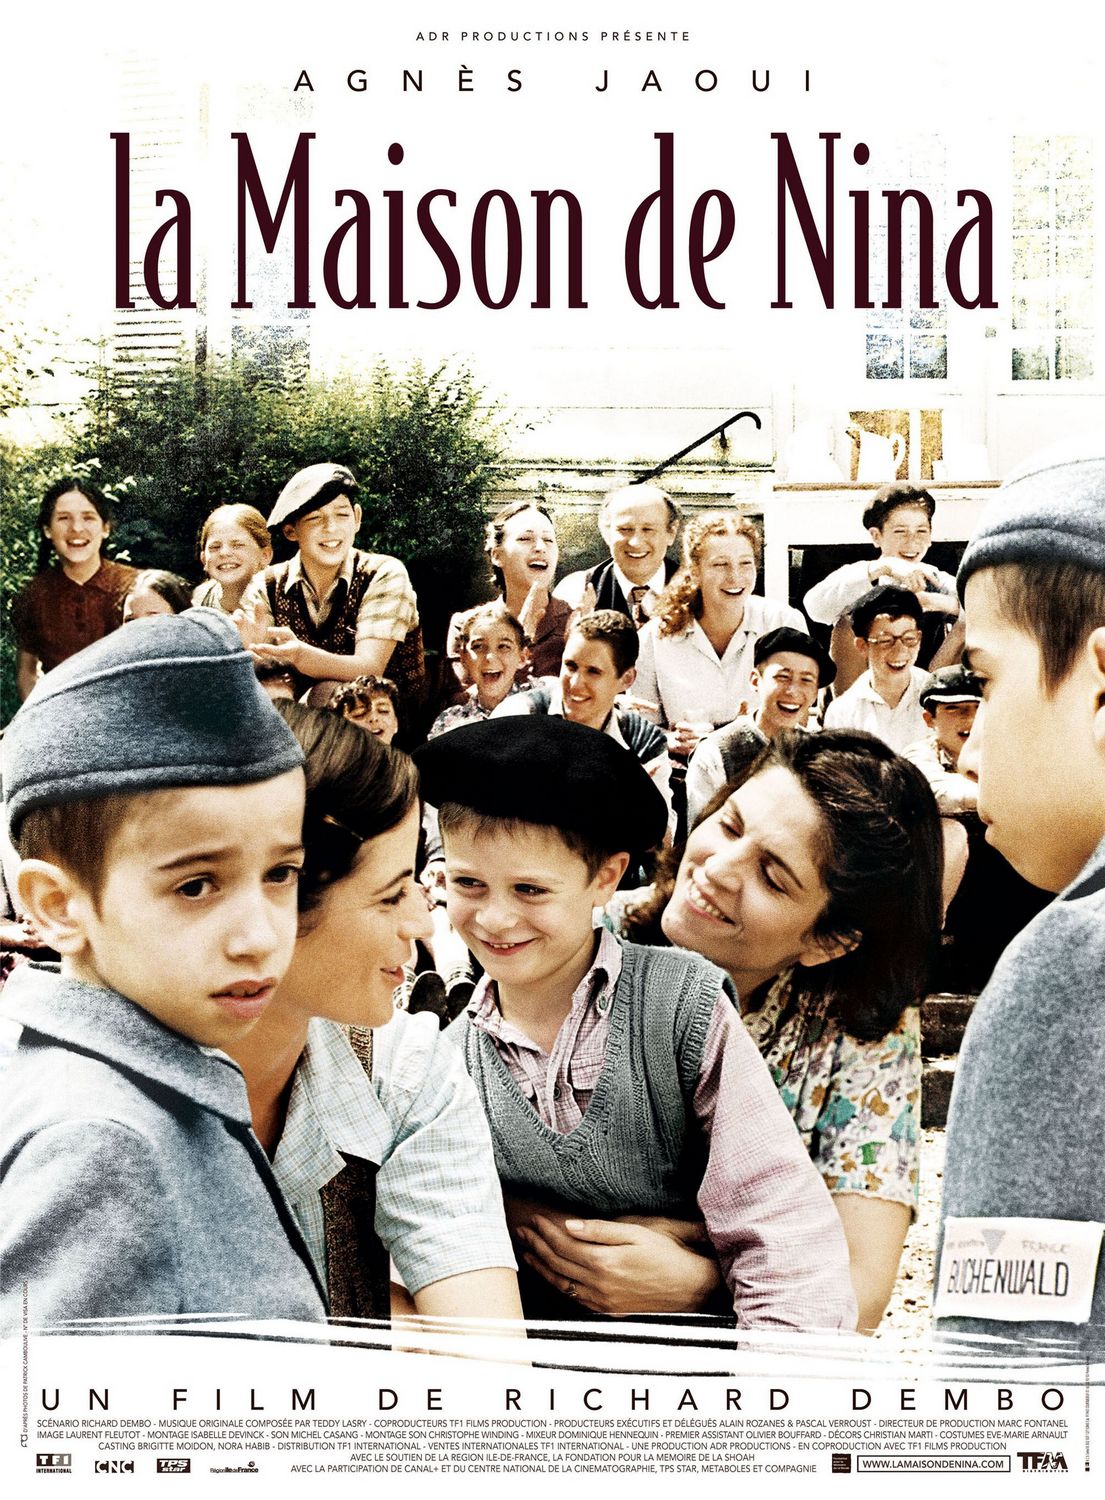 Extra Large Movie Poster Image for Maison de Nina, La 